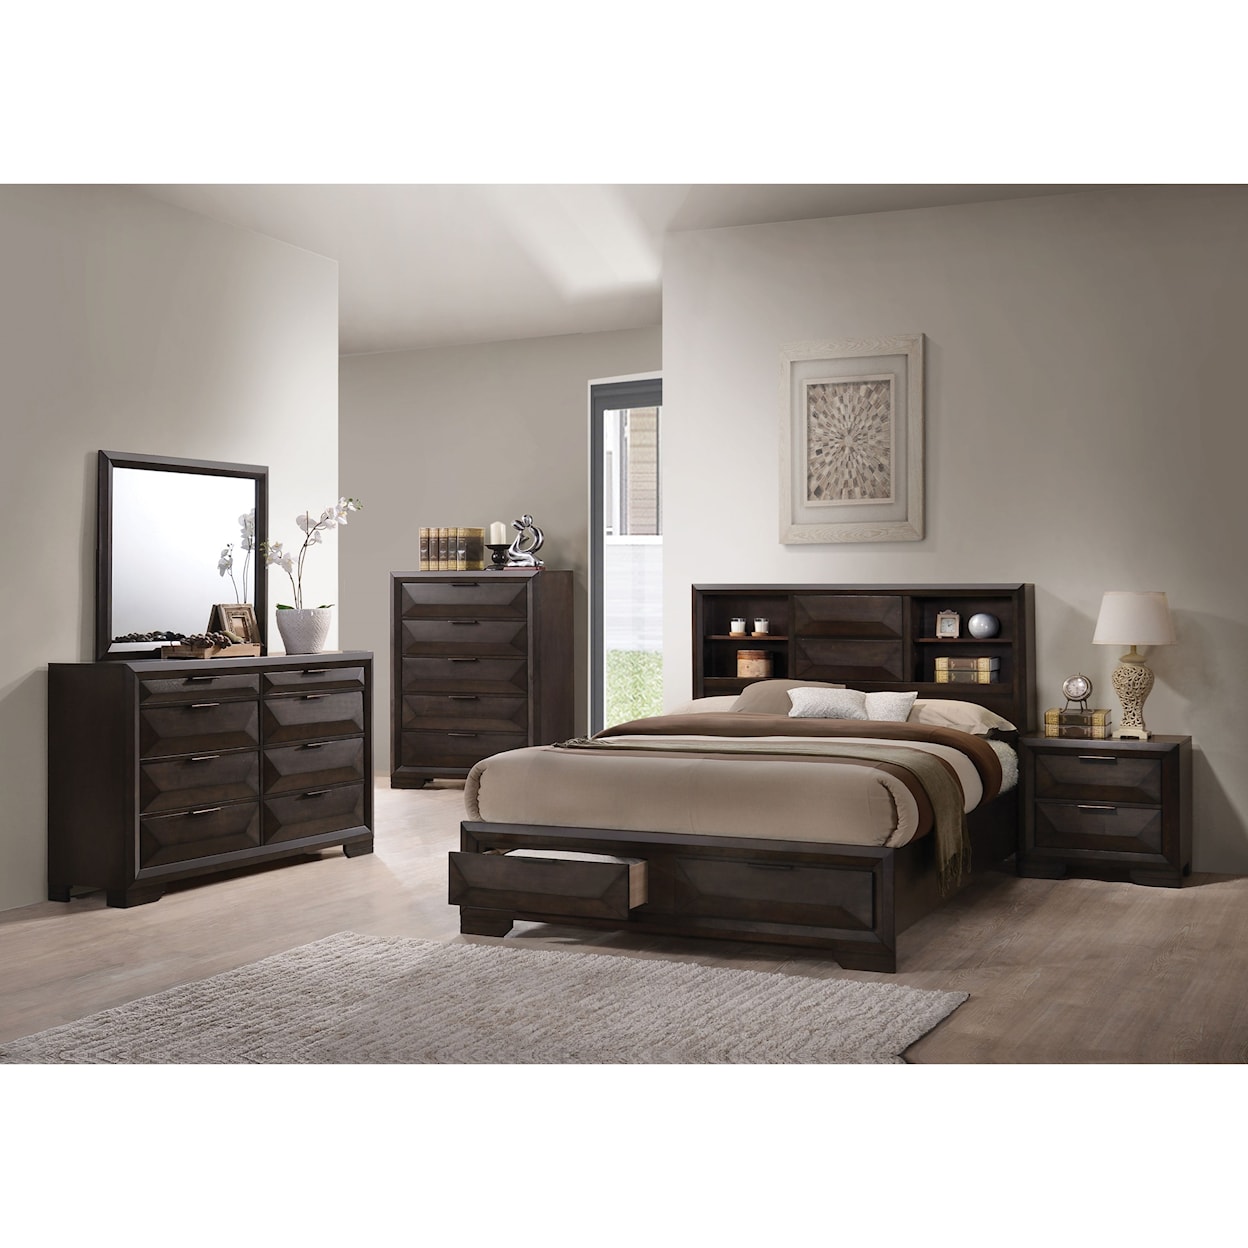 Acme Furniture Merveille King Bedroom Group